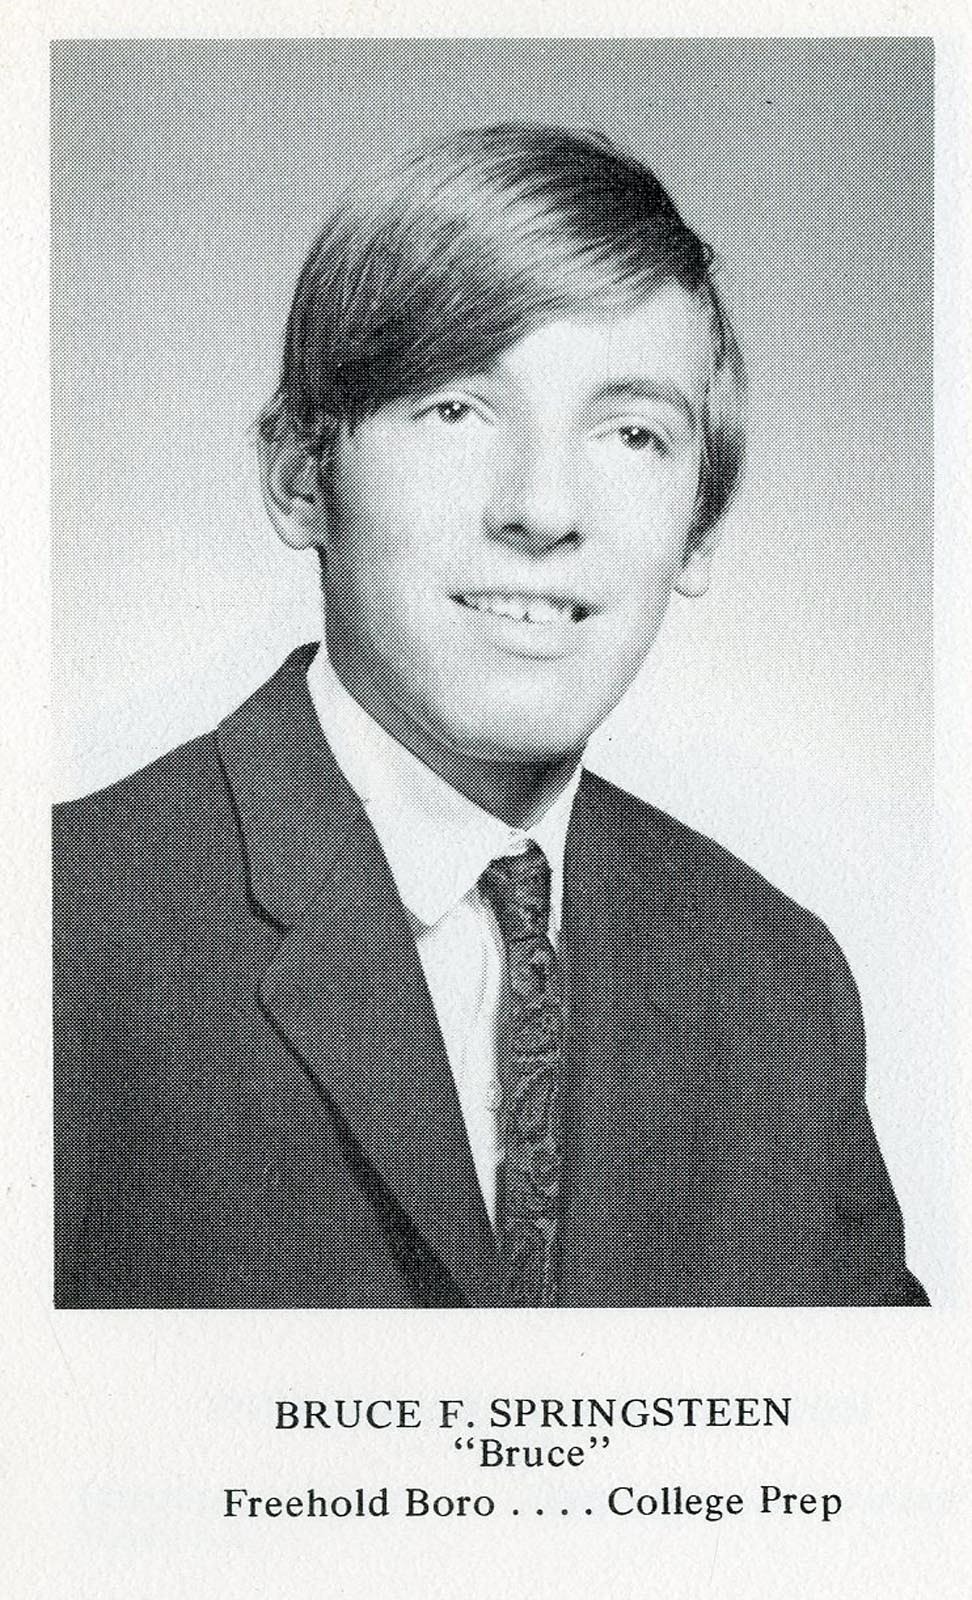 Best of the Best - 1967 Bruce Springsteen High School Yearbook